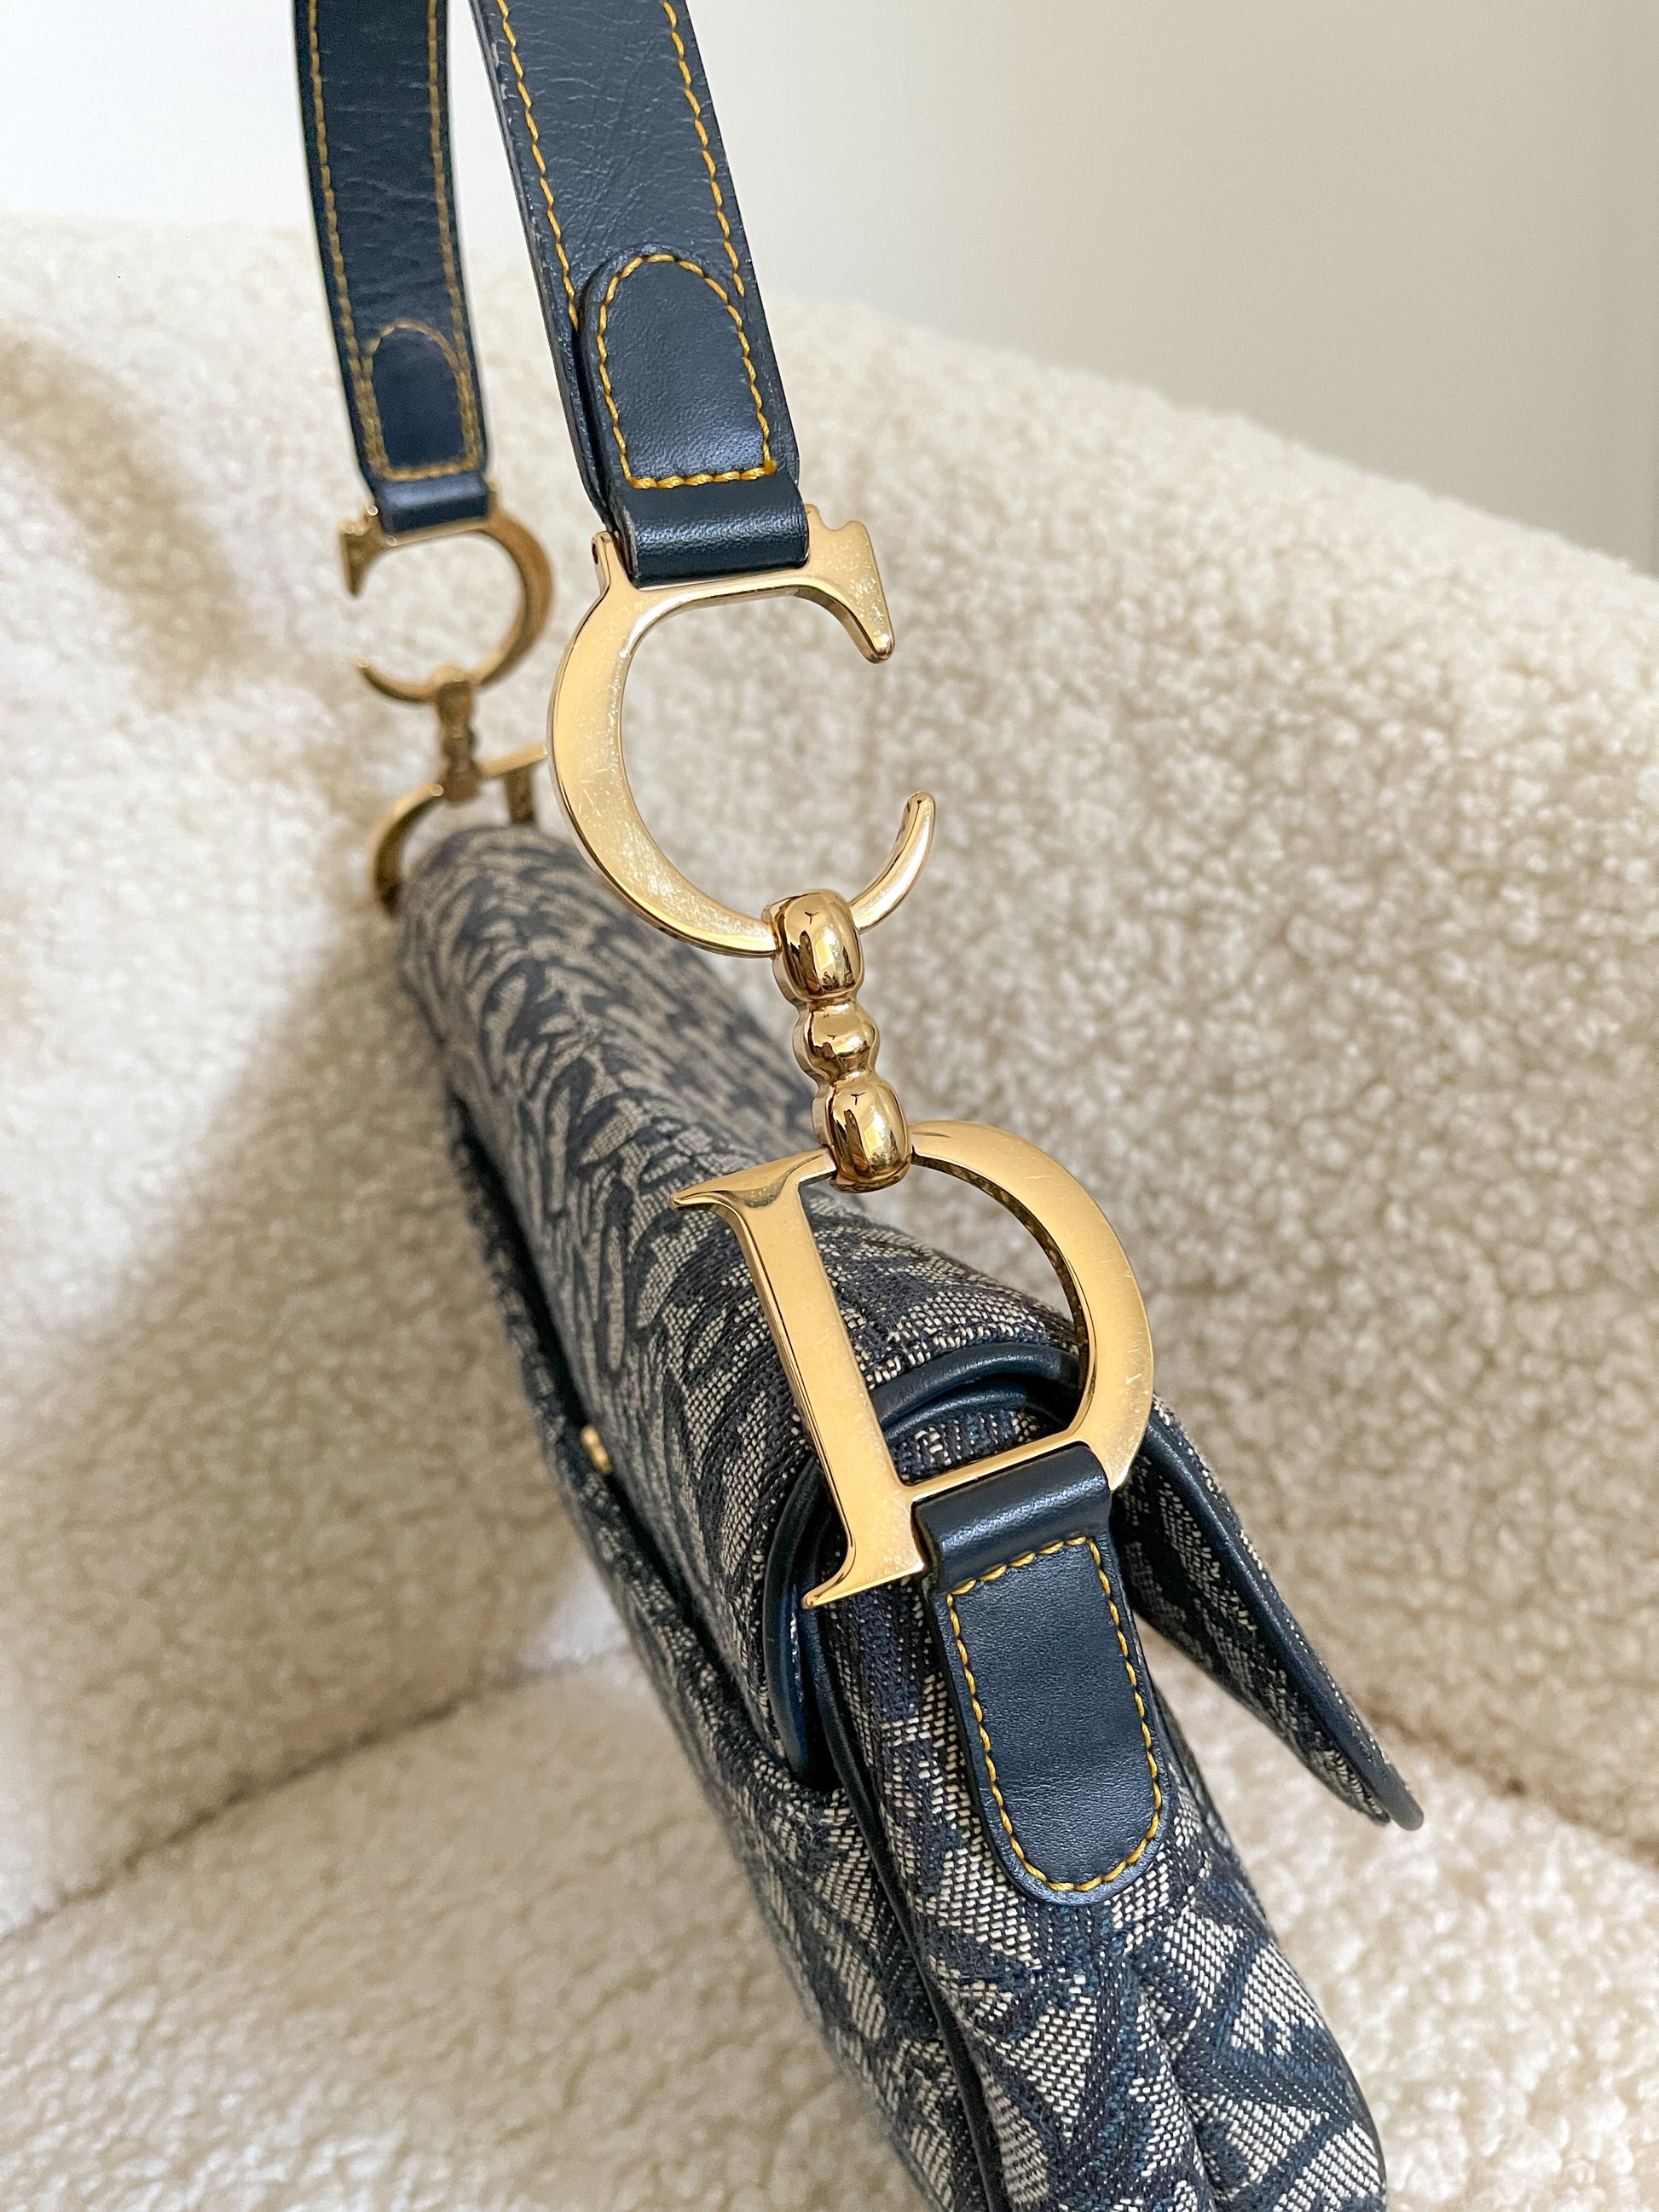 Christian Dior Mini Saddle Bag - Vintage Mode und Accessoires 2020/10/06 -  Realized price: EUR 280 - Dorotheum